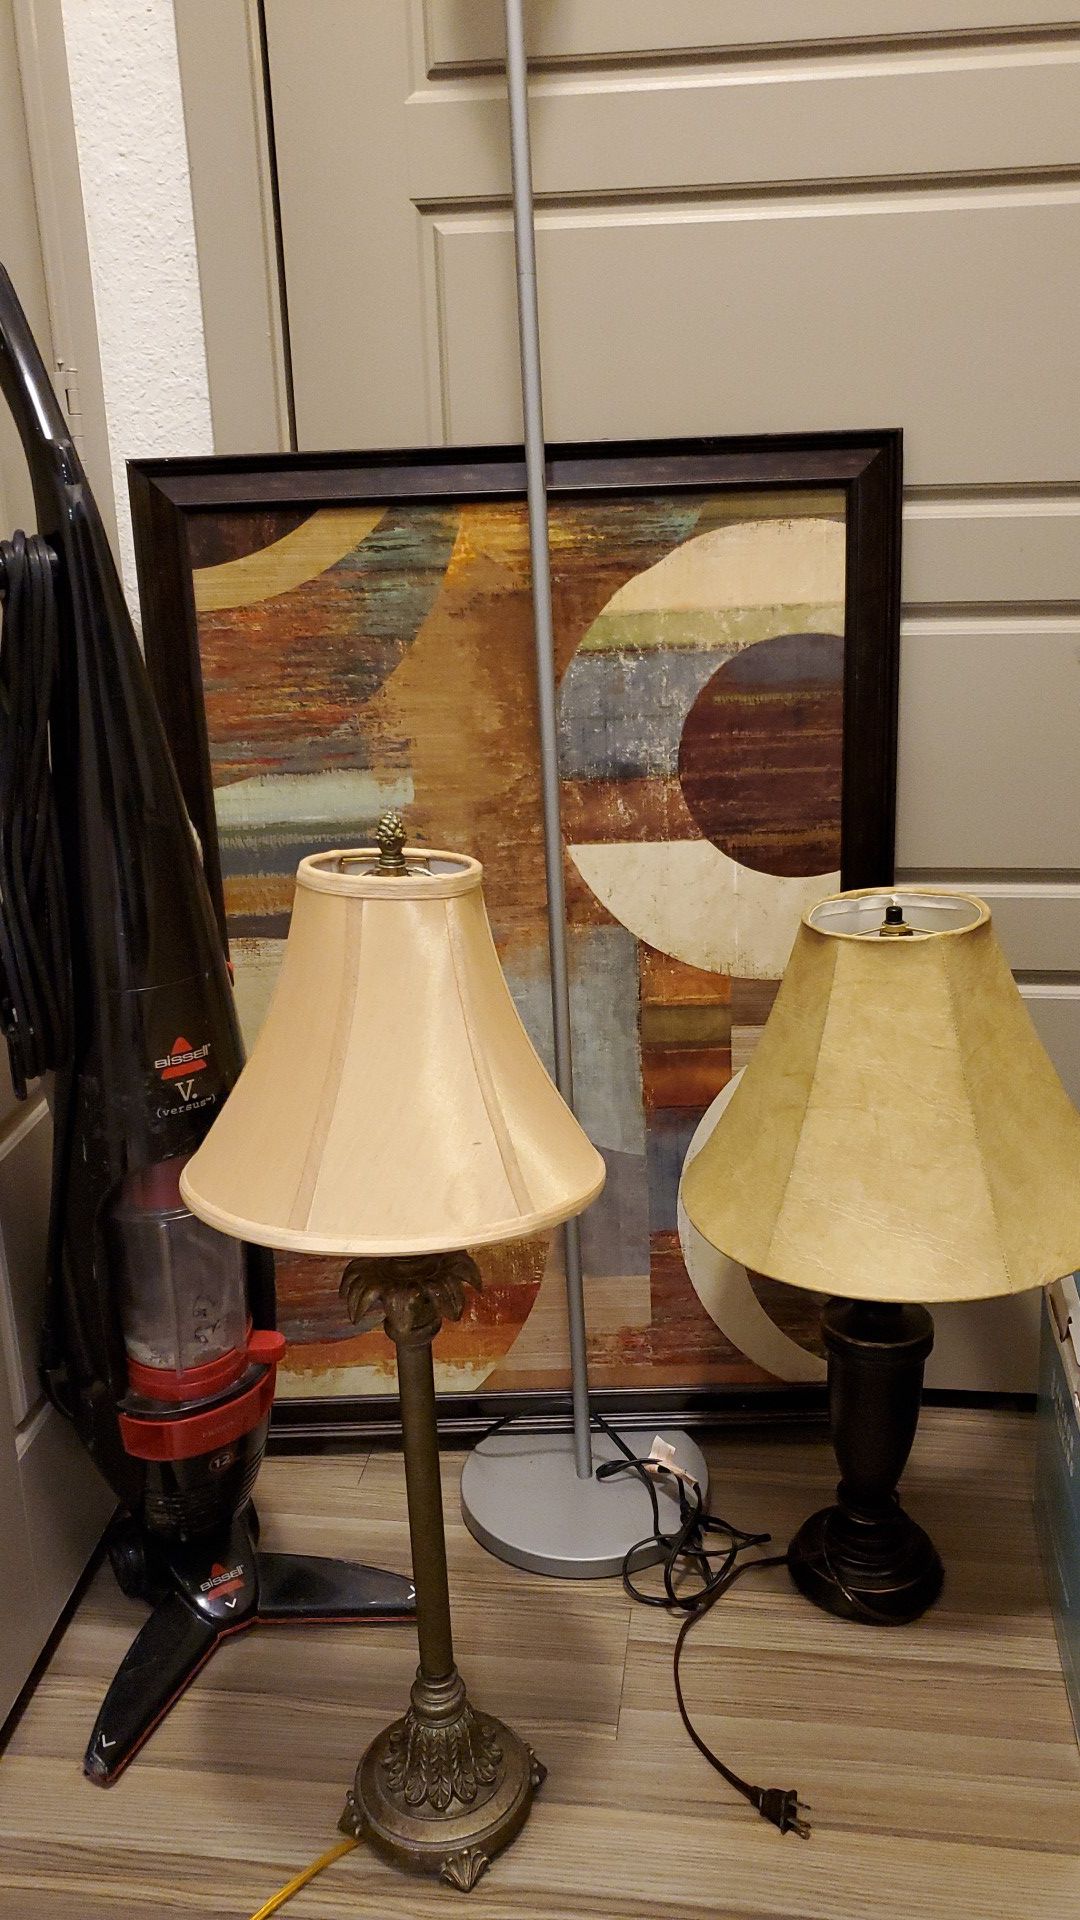 3 lamps, art frame, vacum, shelf all $10